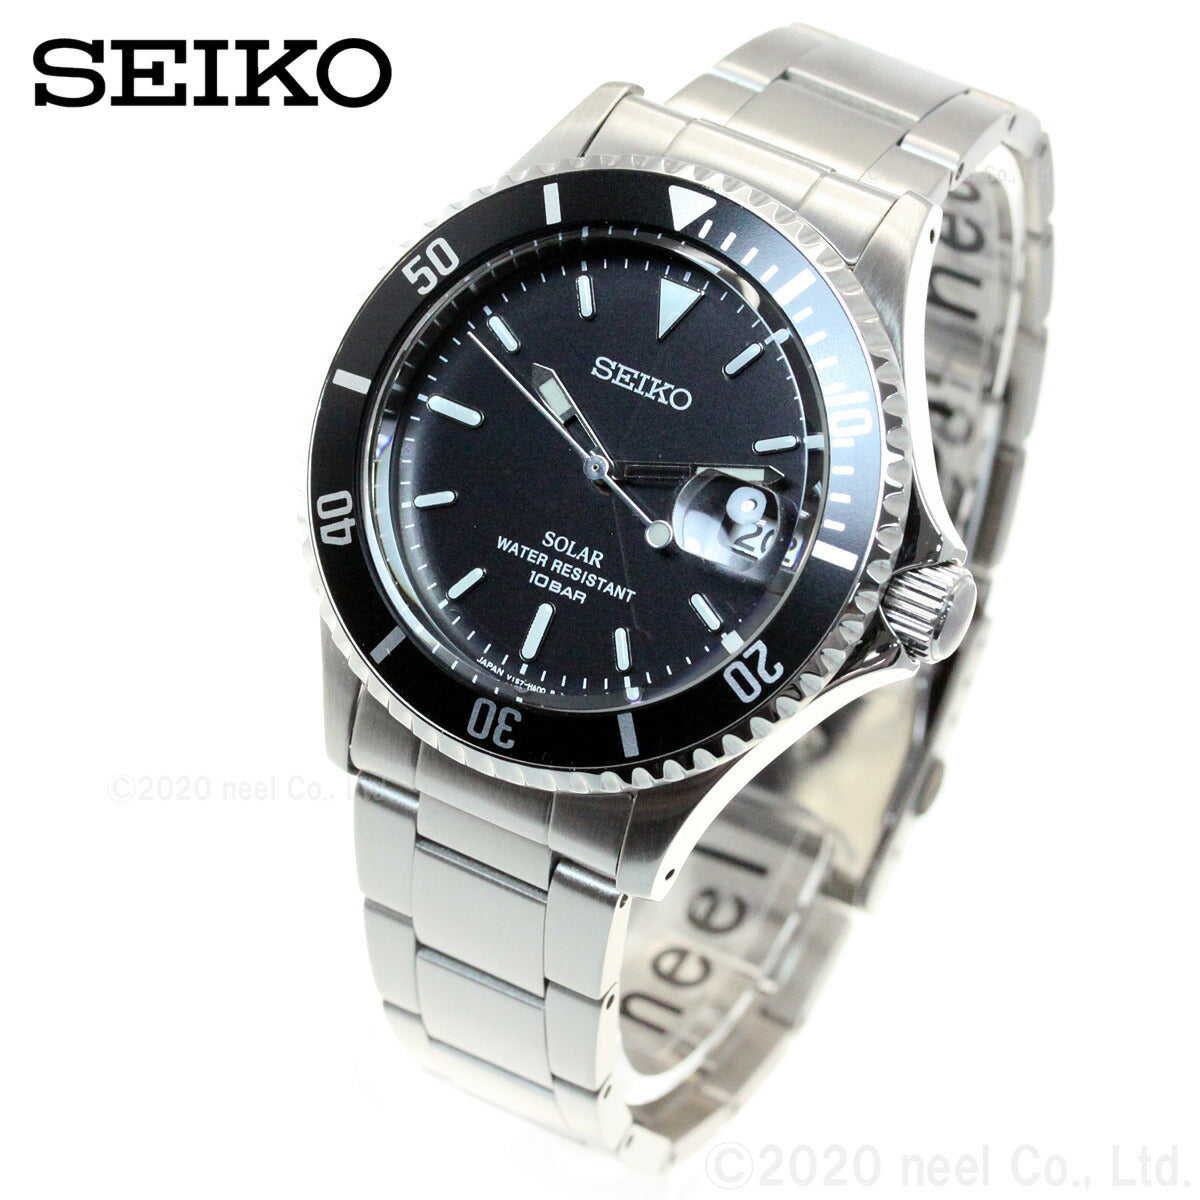 SEIKO SOLAR ショップ限定モデル  腕時計  SZEV011付属品は写真が全てです